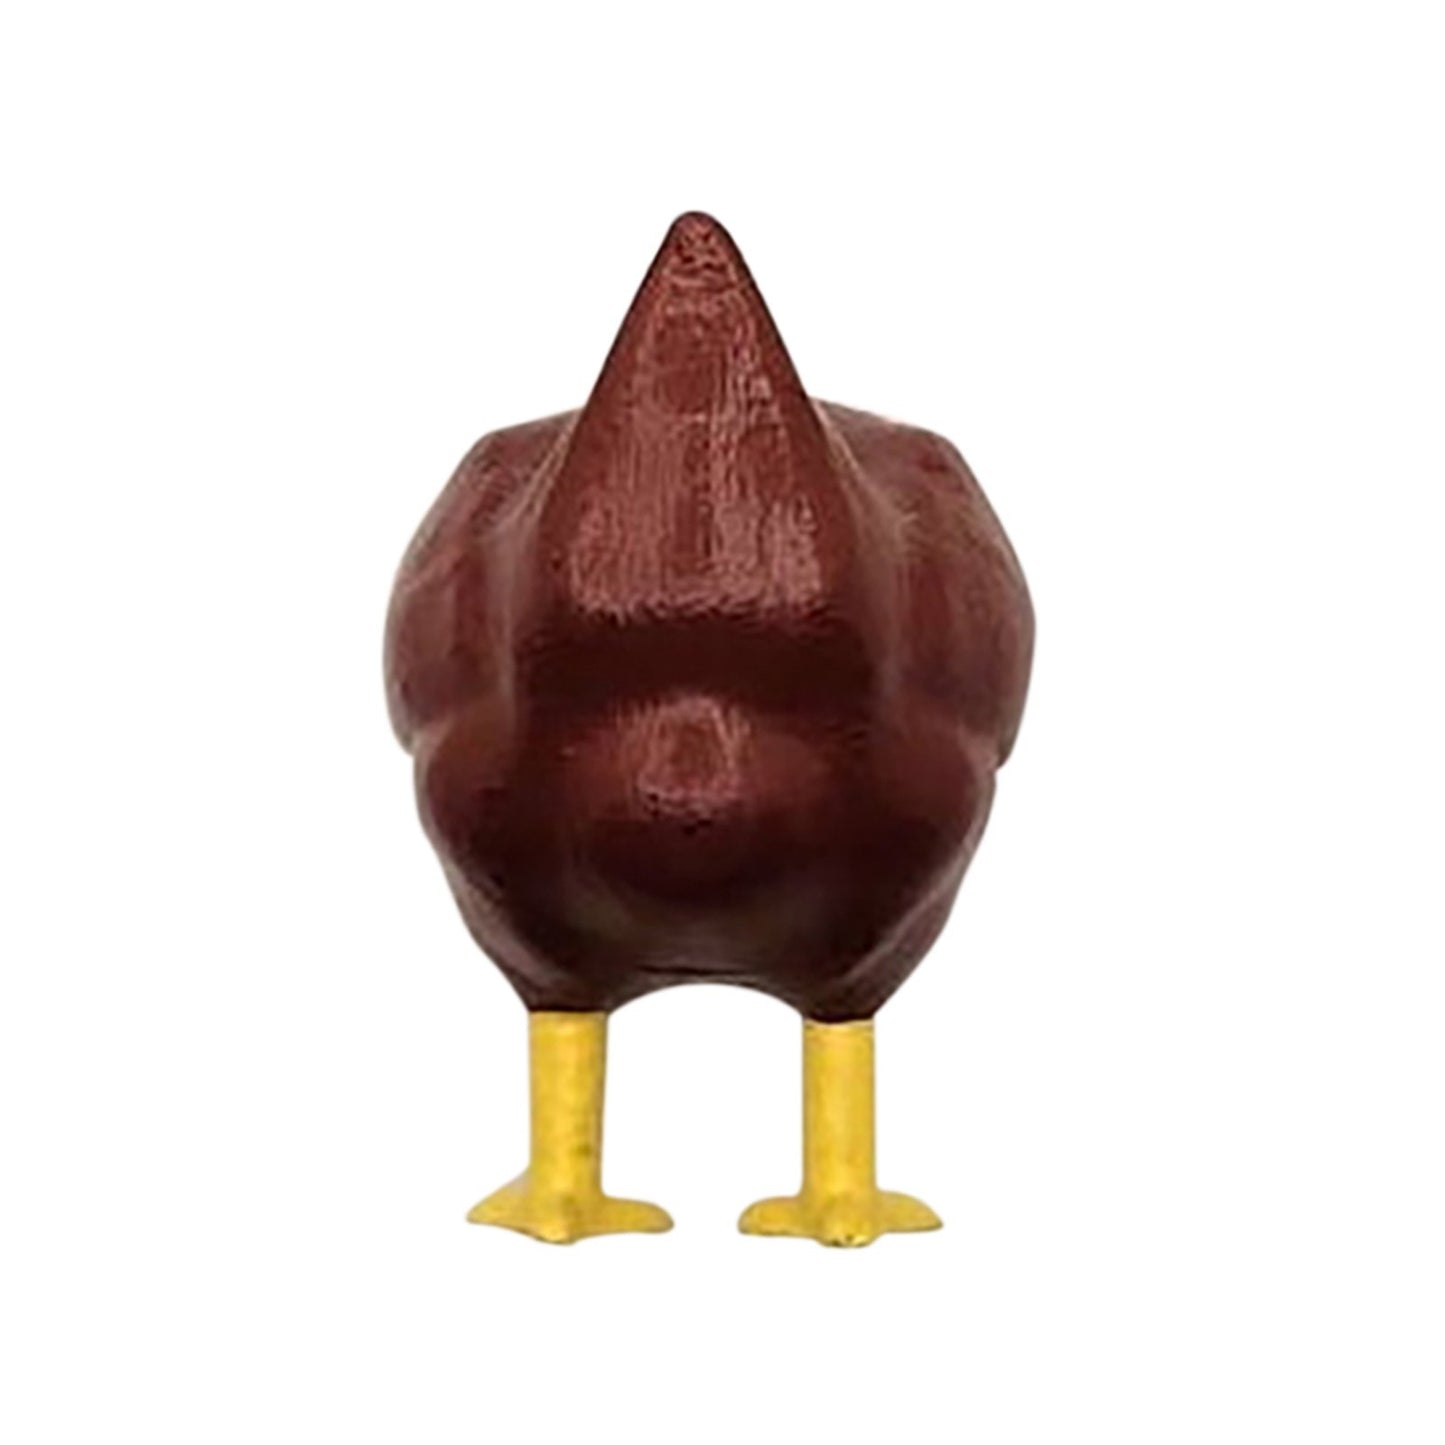 Chicken butt magnets - funny chicken gift - chicken home decor - farmer gift - brown